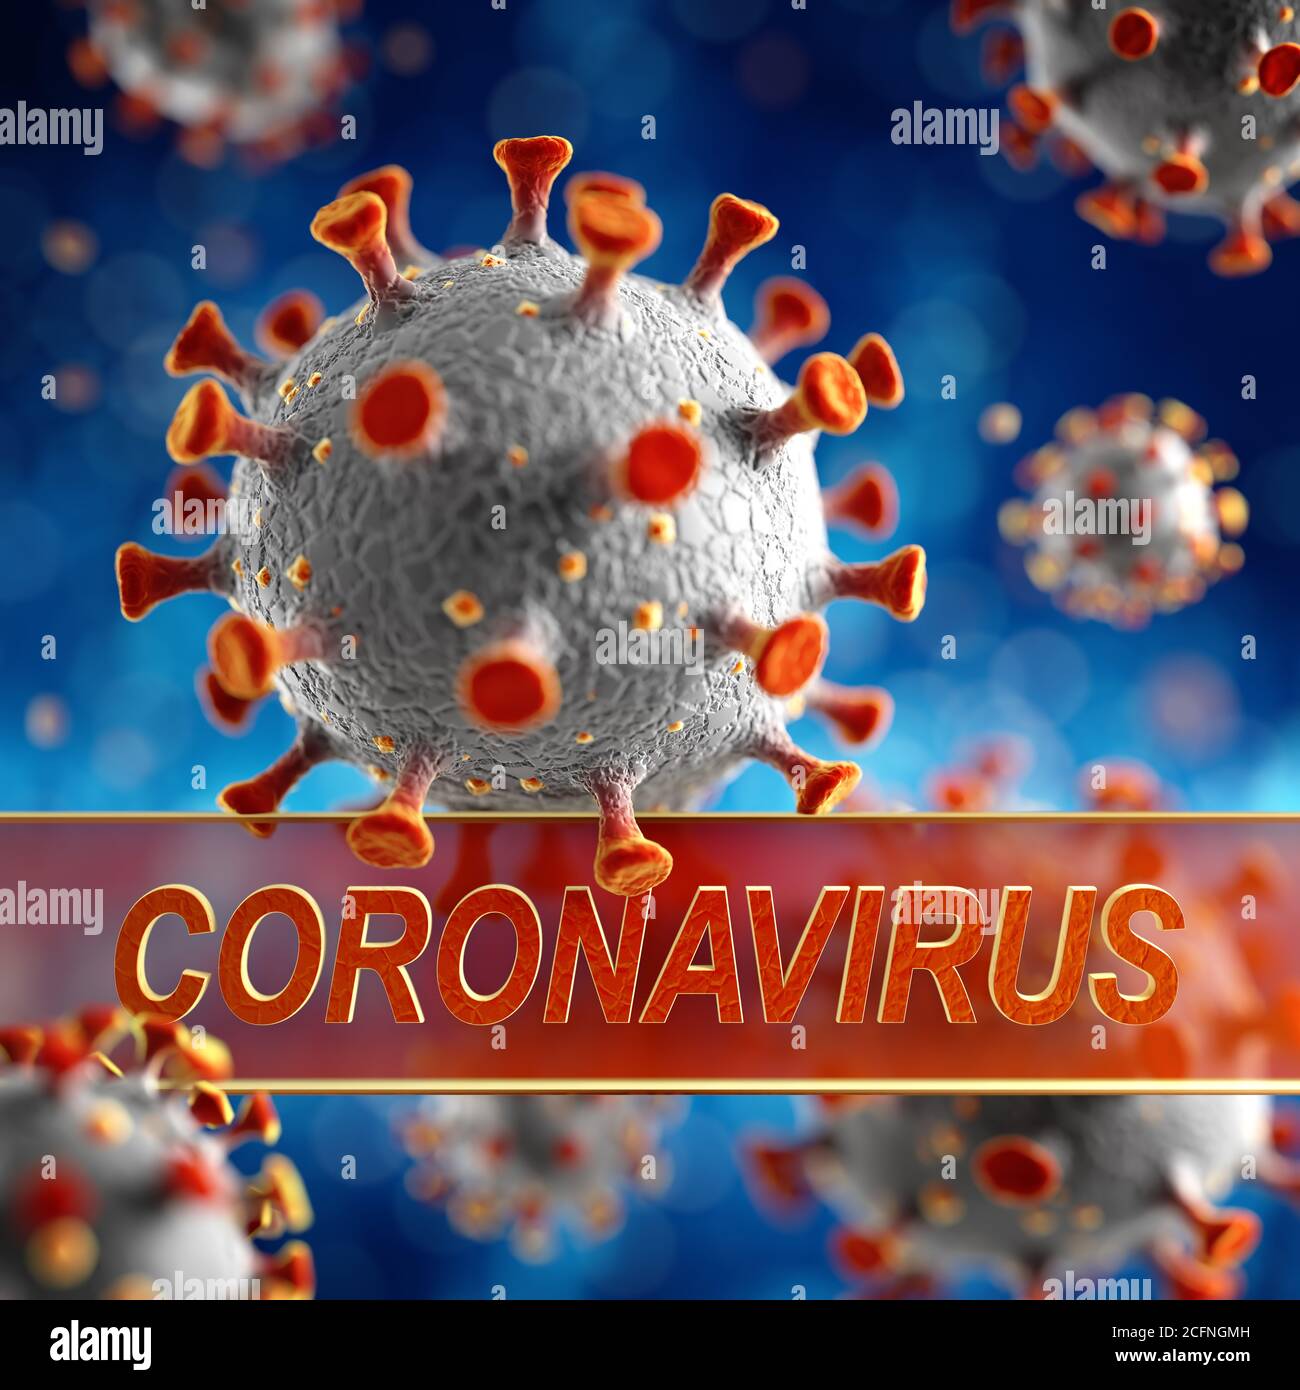 Novel Coronavirus, 2019-nCoV or SARS-CoV-2, cause of the global flu pandemic. Microscopic virus close up concept with Corona virus text. 3d rendering. Stock Photo